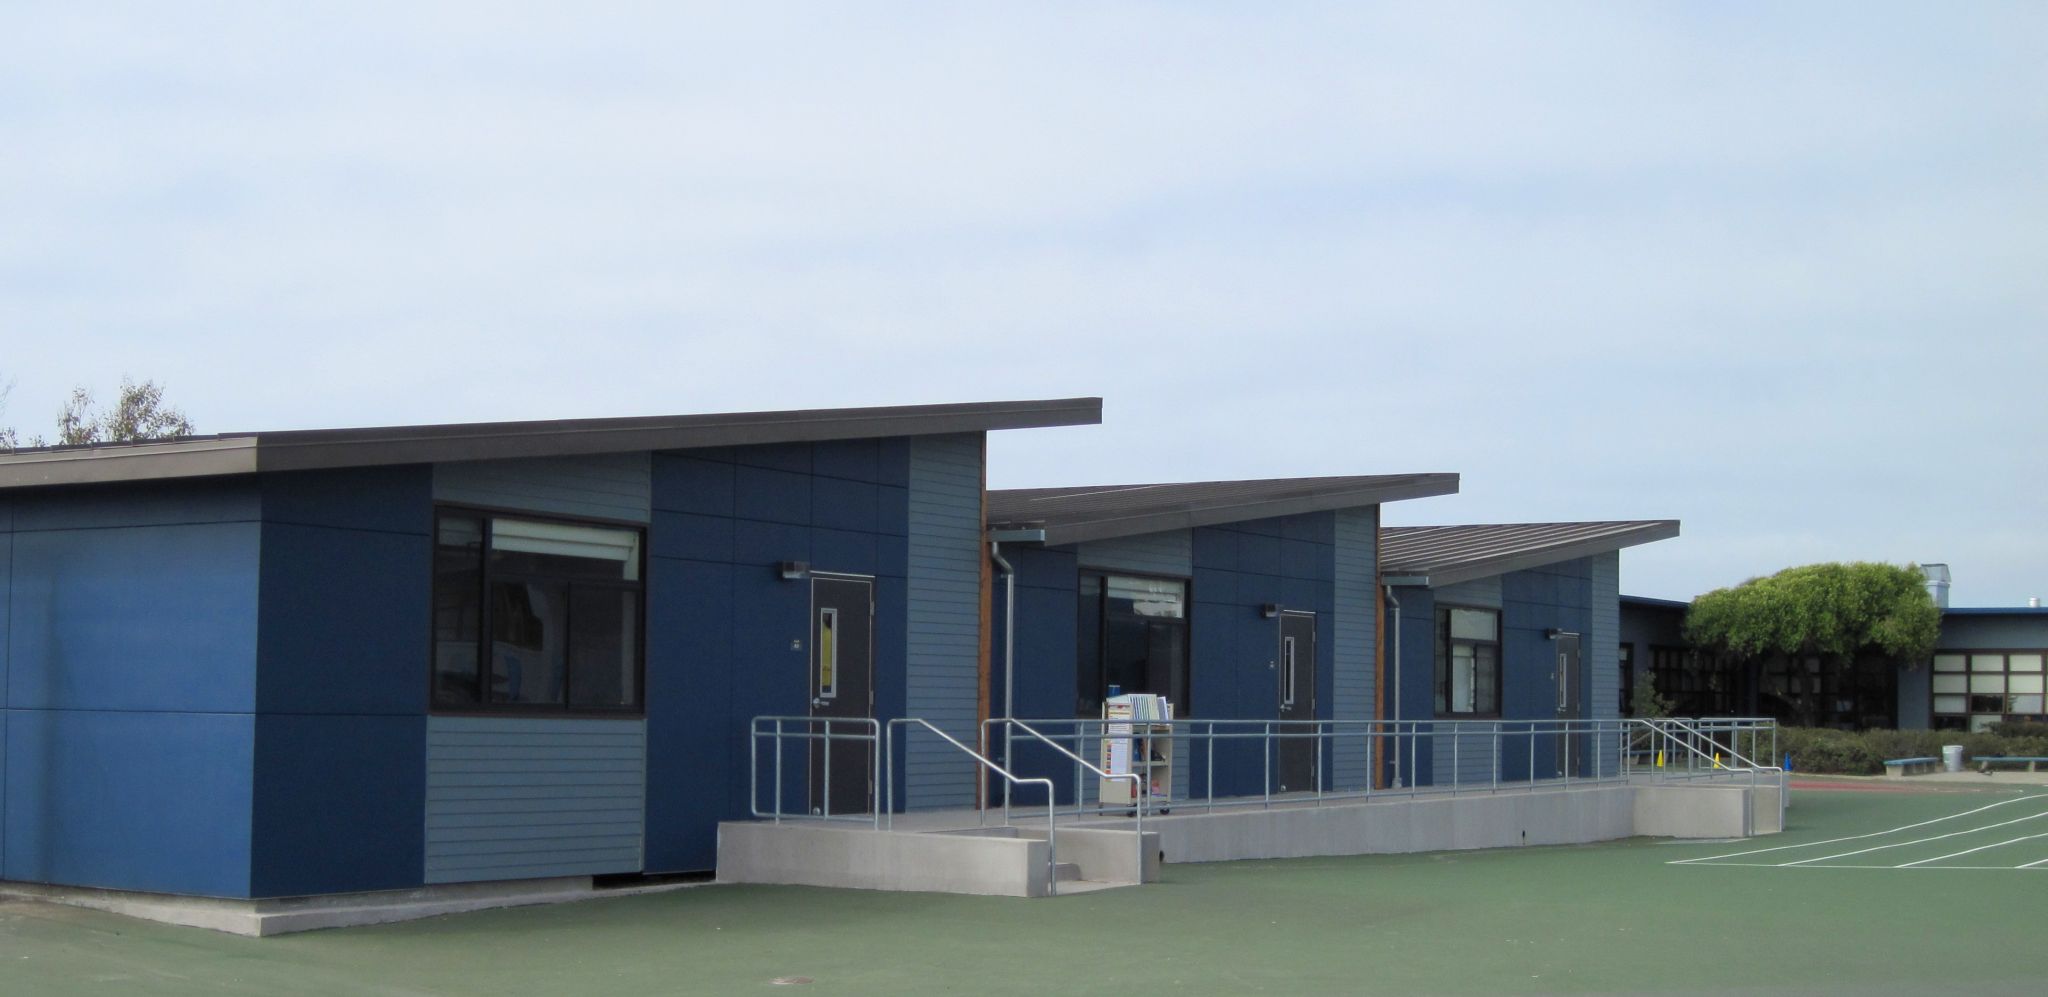 Exterior of Sunset Elementary School New Modular Classrooms